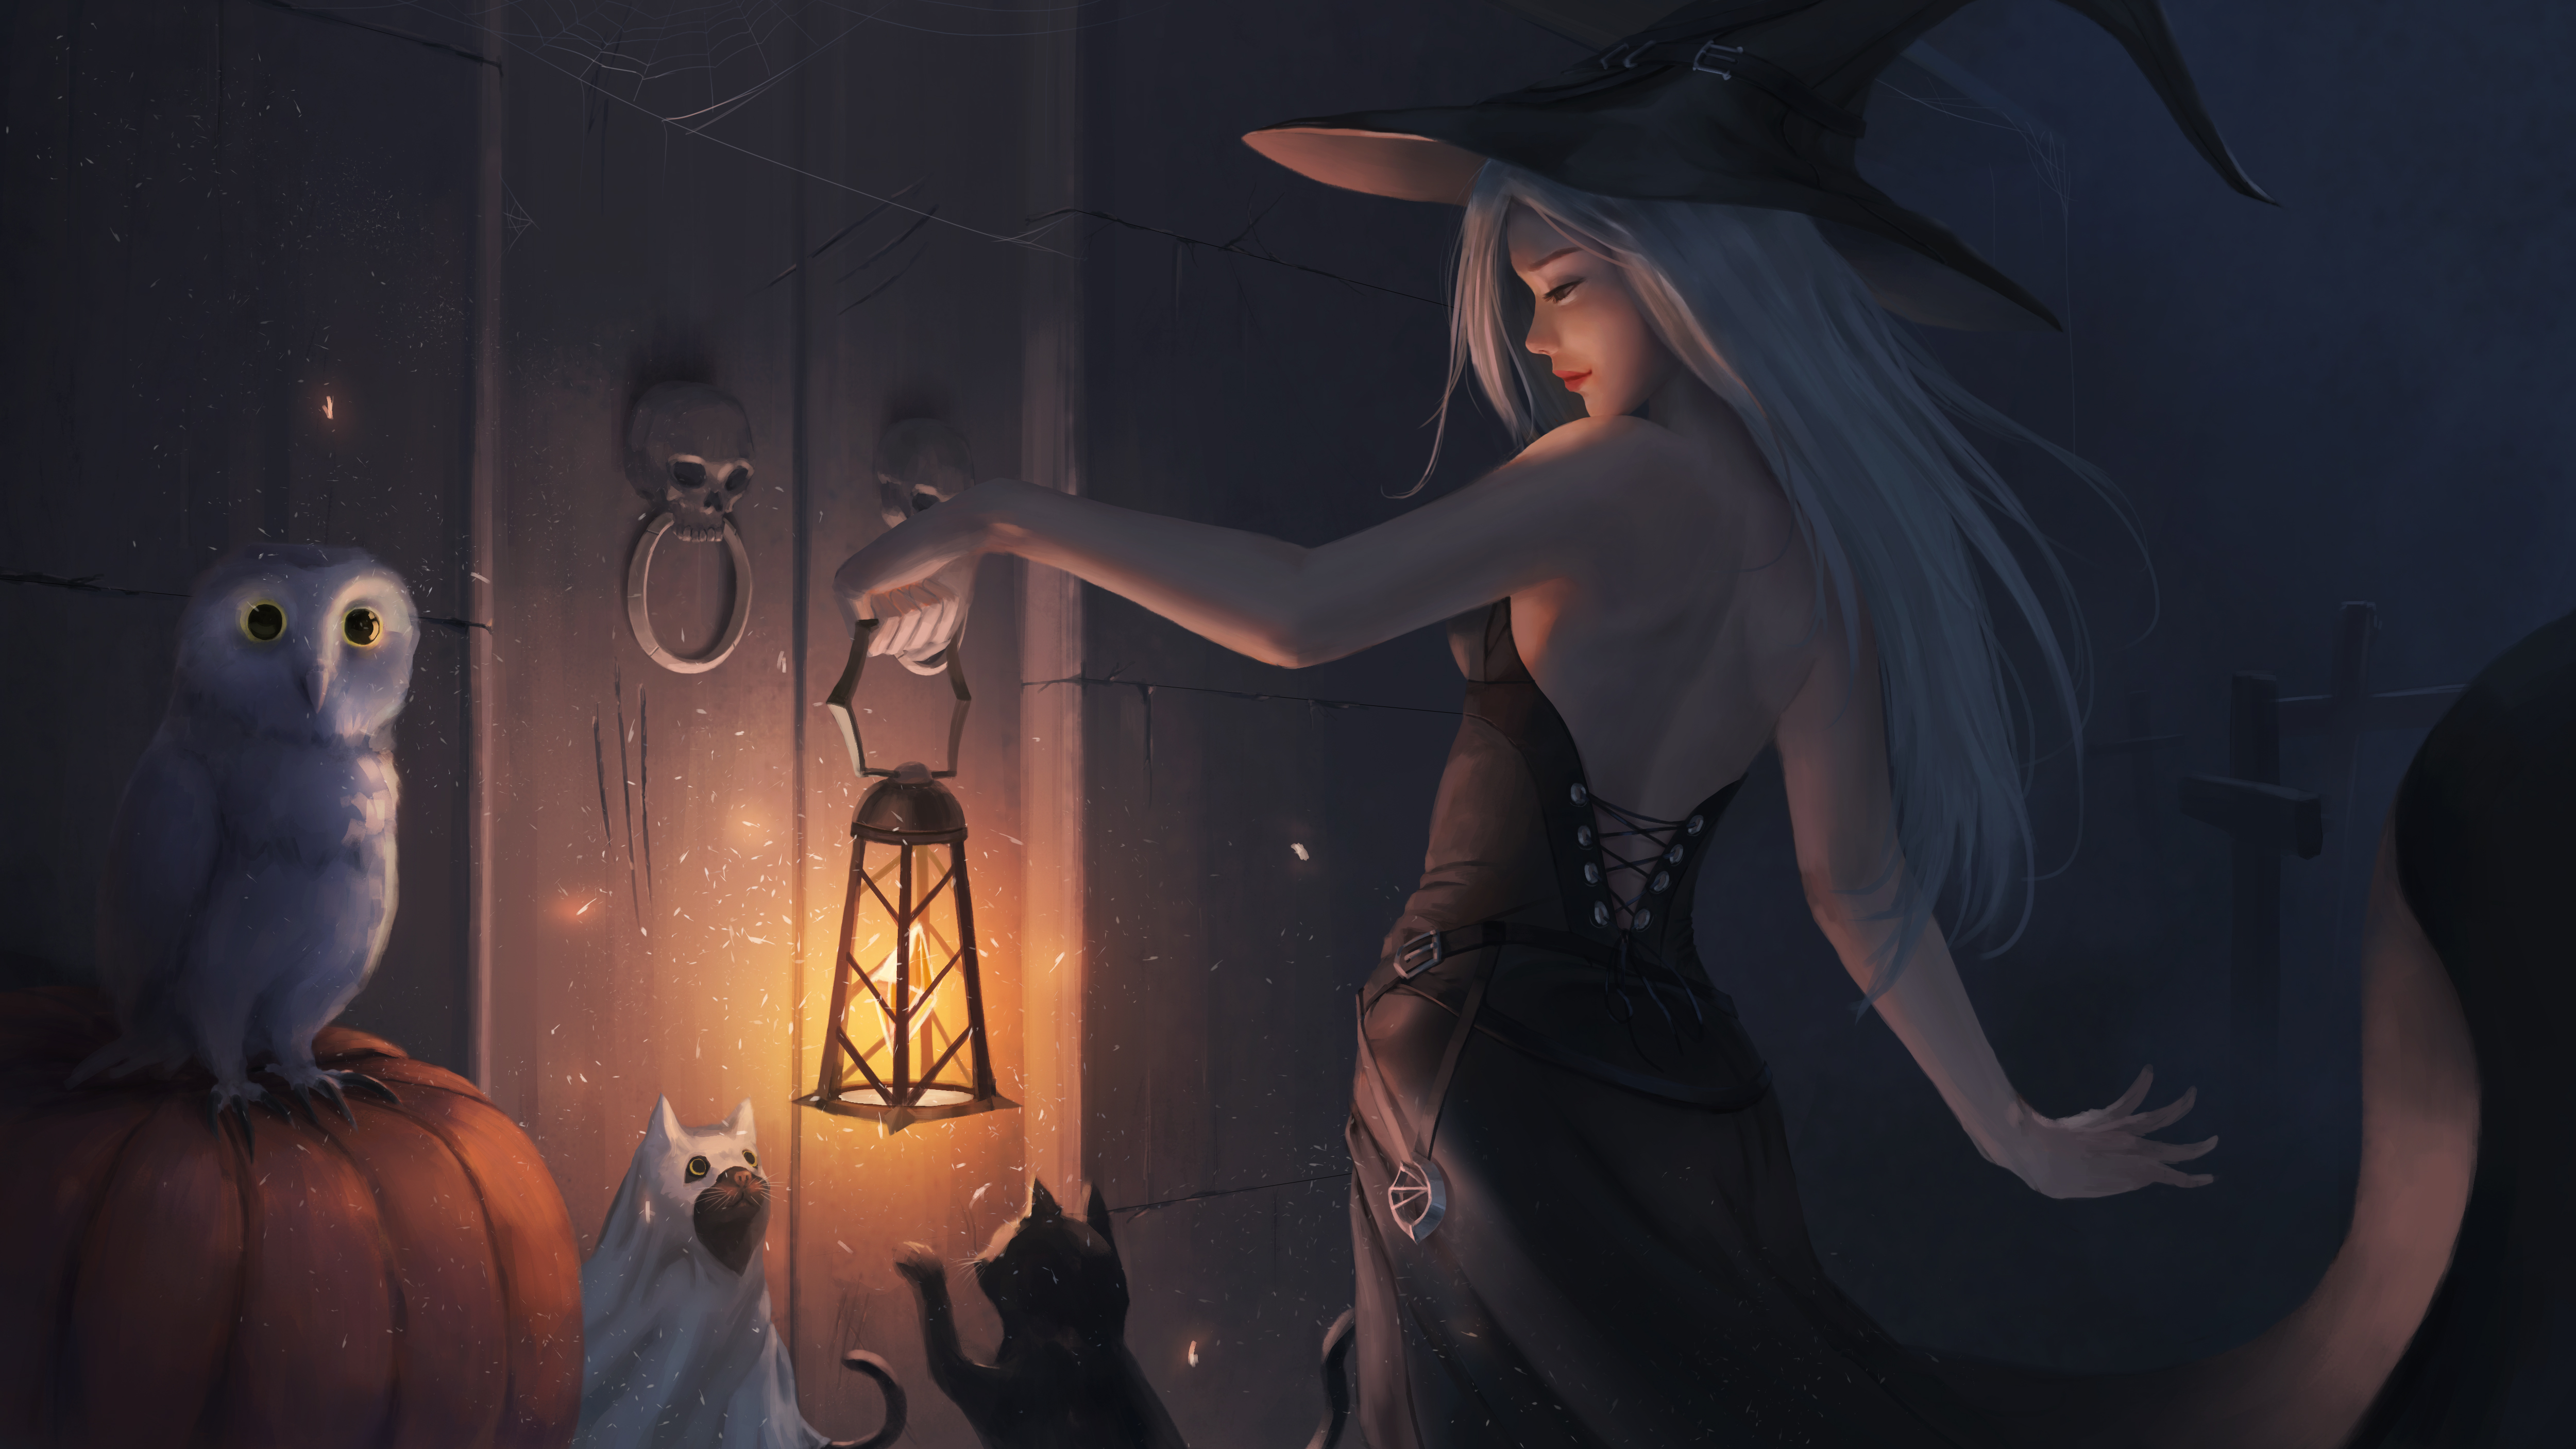 Fantasy Witch 4k Ultra HD Wallpaper by Allen Hsieh